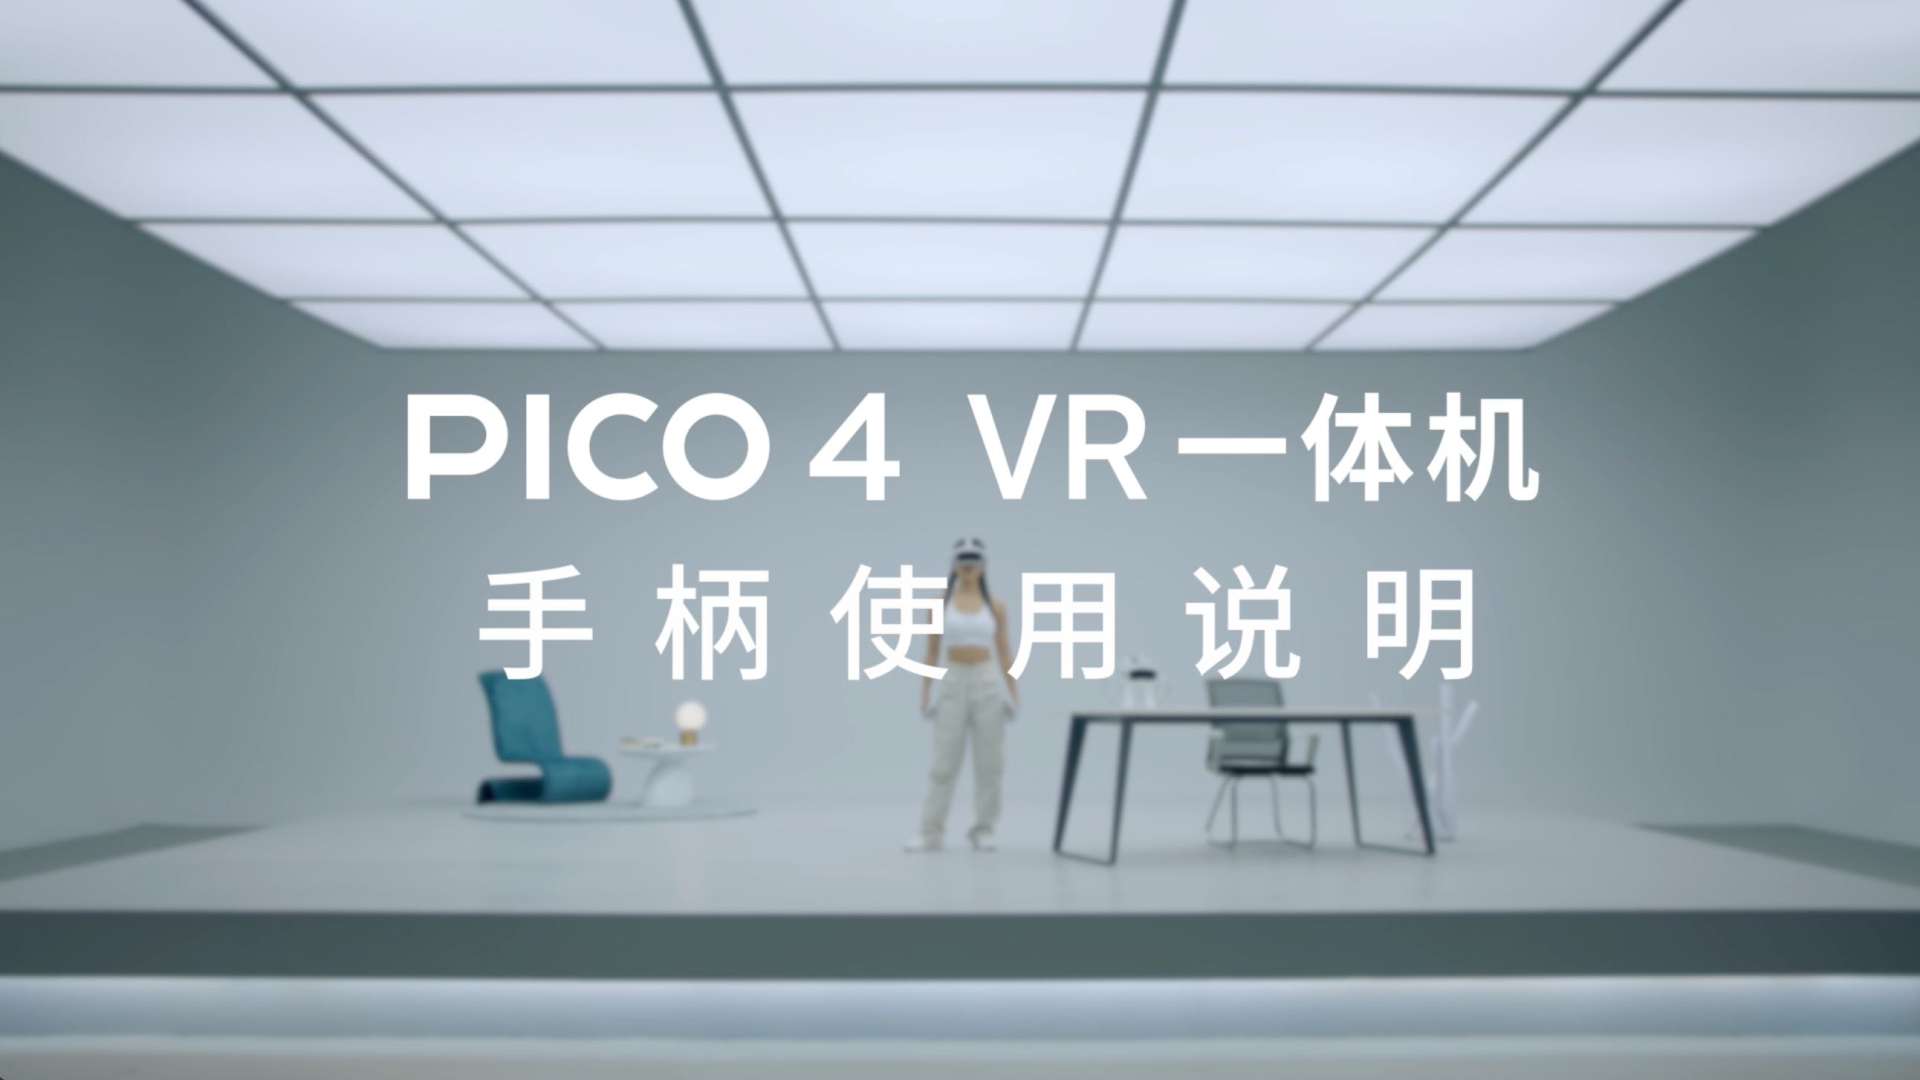 PICO 4 VR一体机手柄使用说明